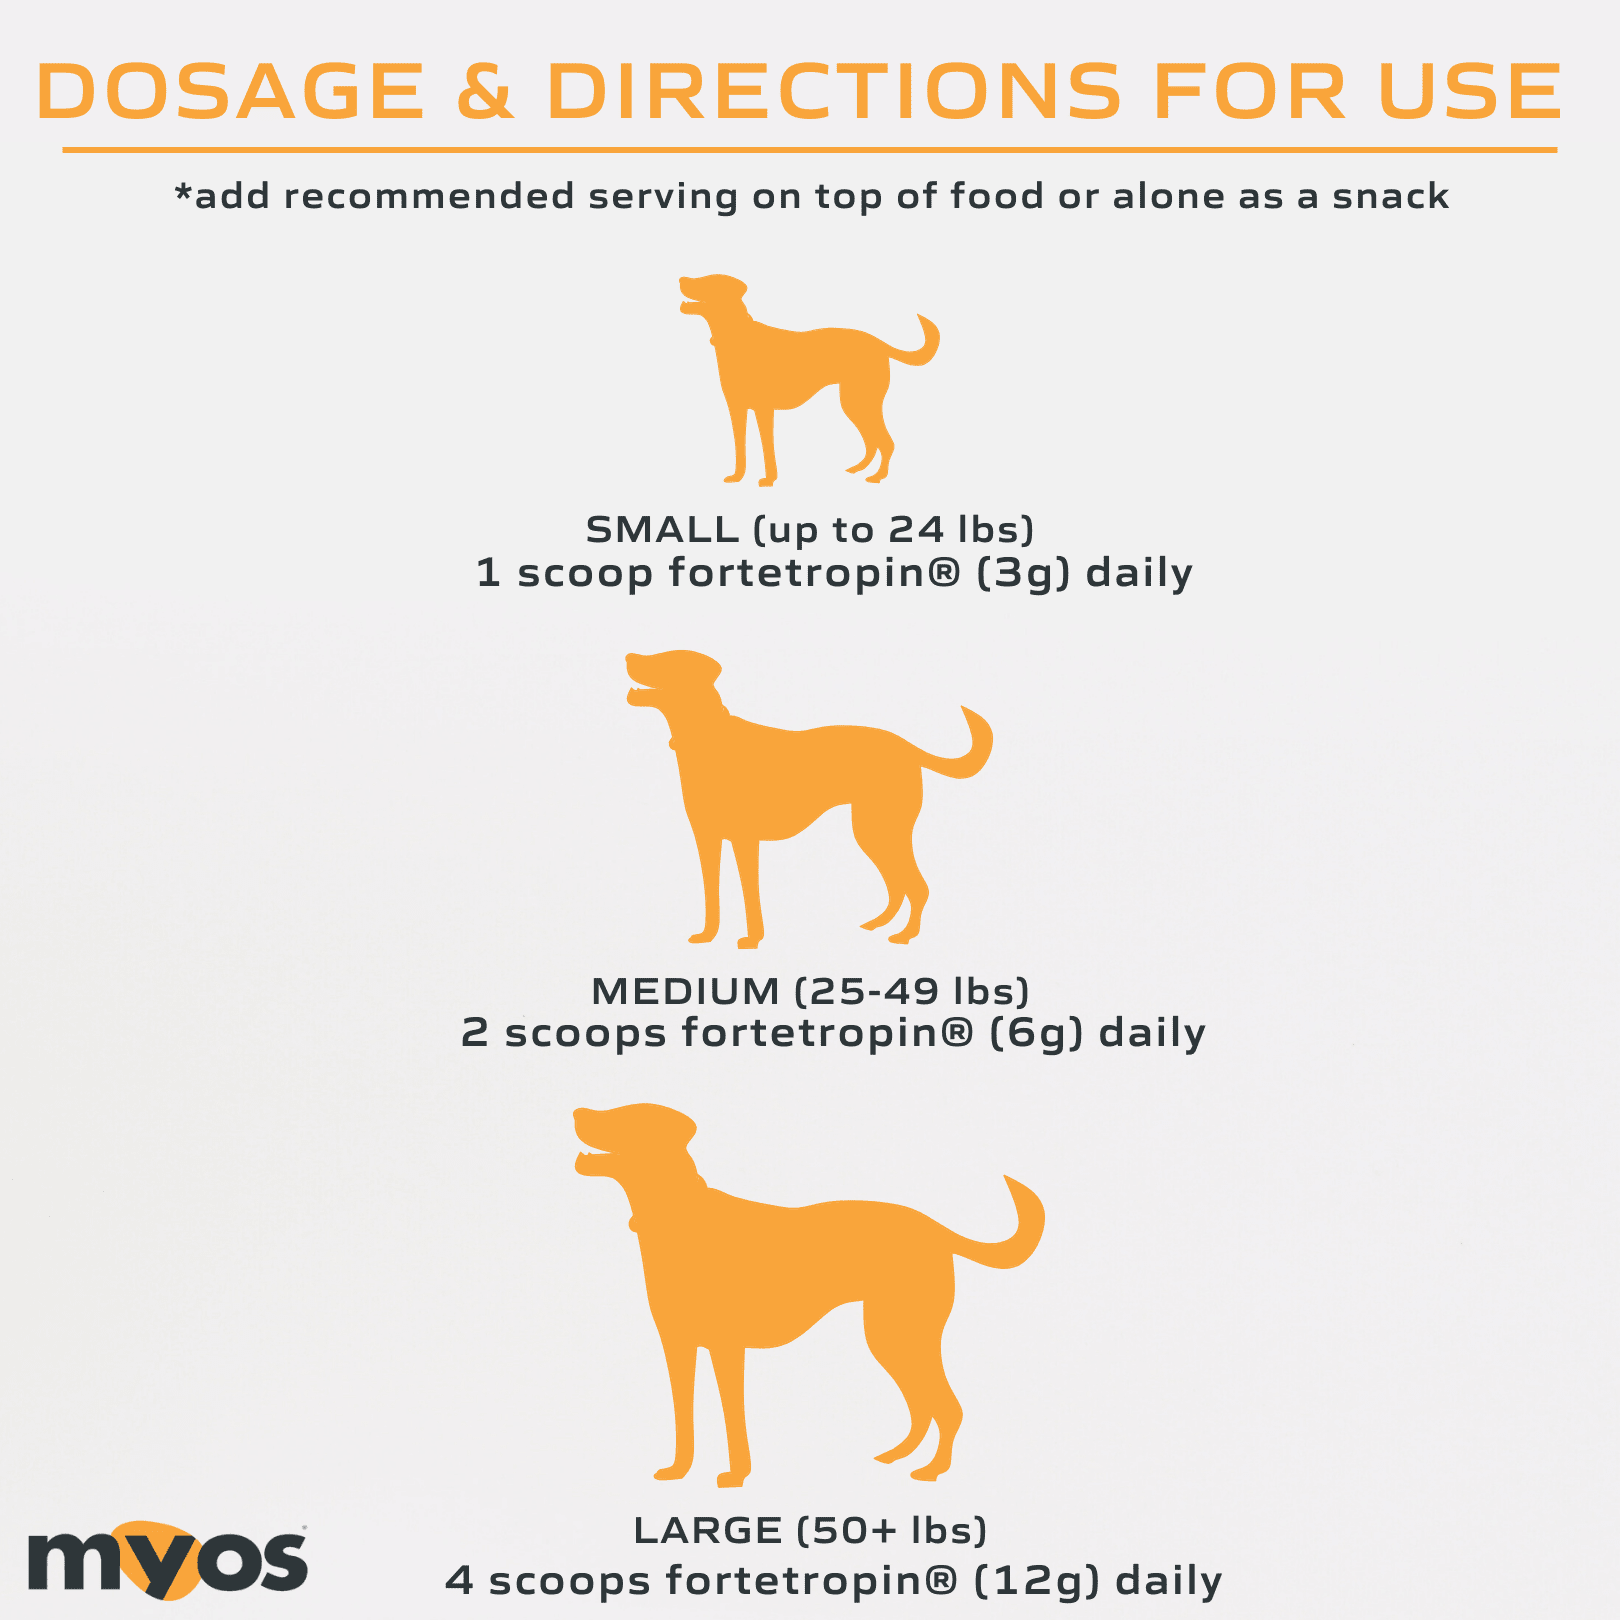 MYOS Canine Muscle Formula 12.7 oz Canister Dog Supplements myospet.com 